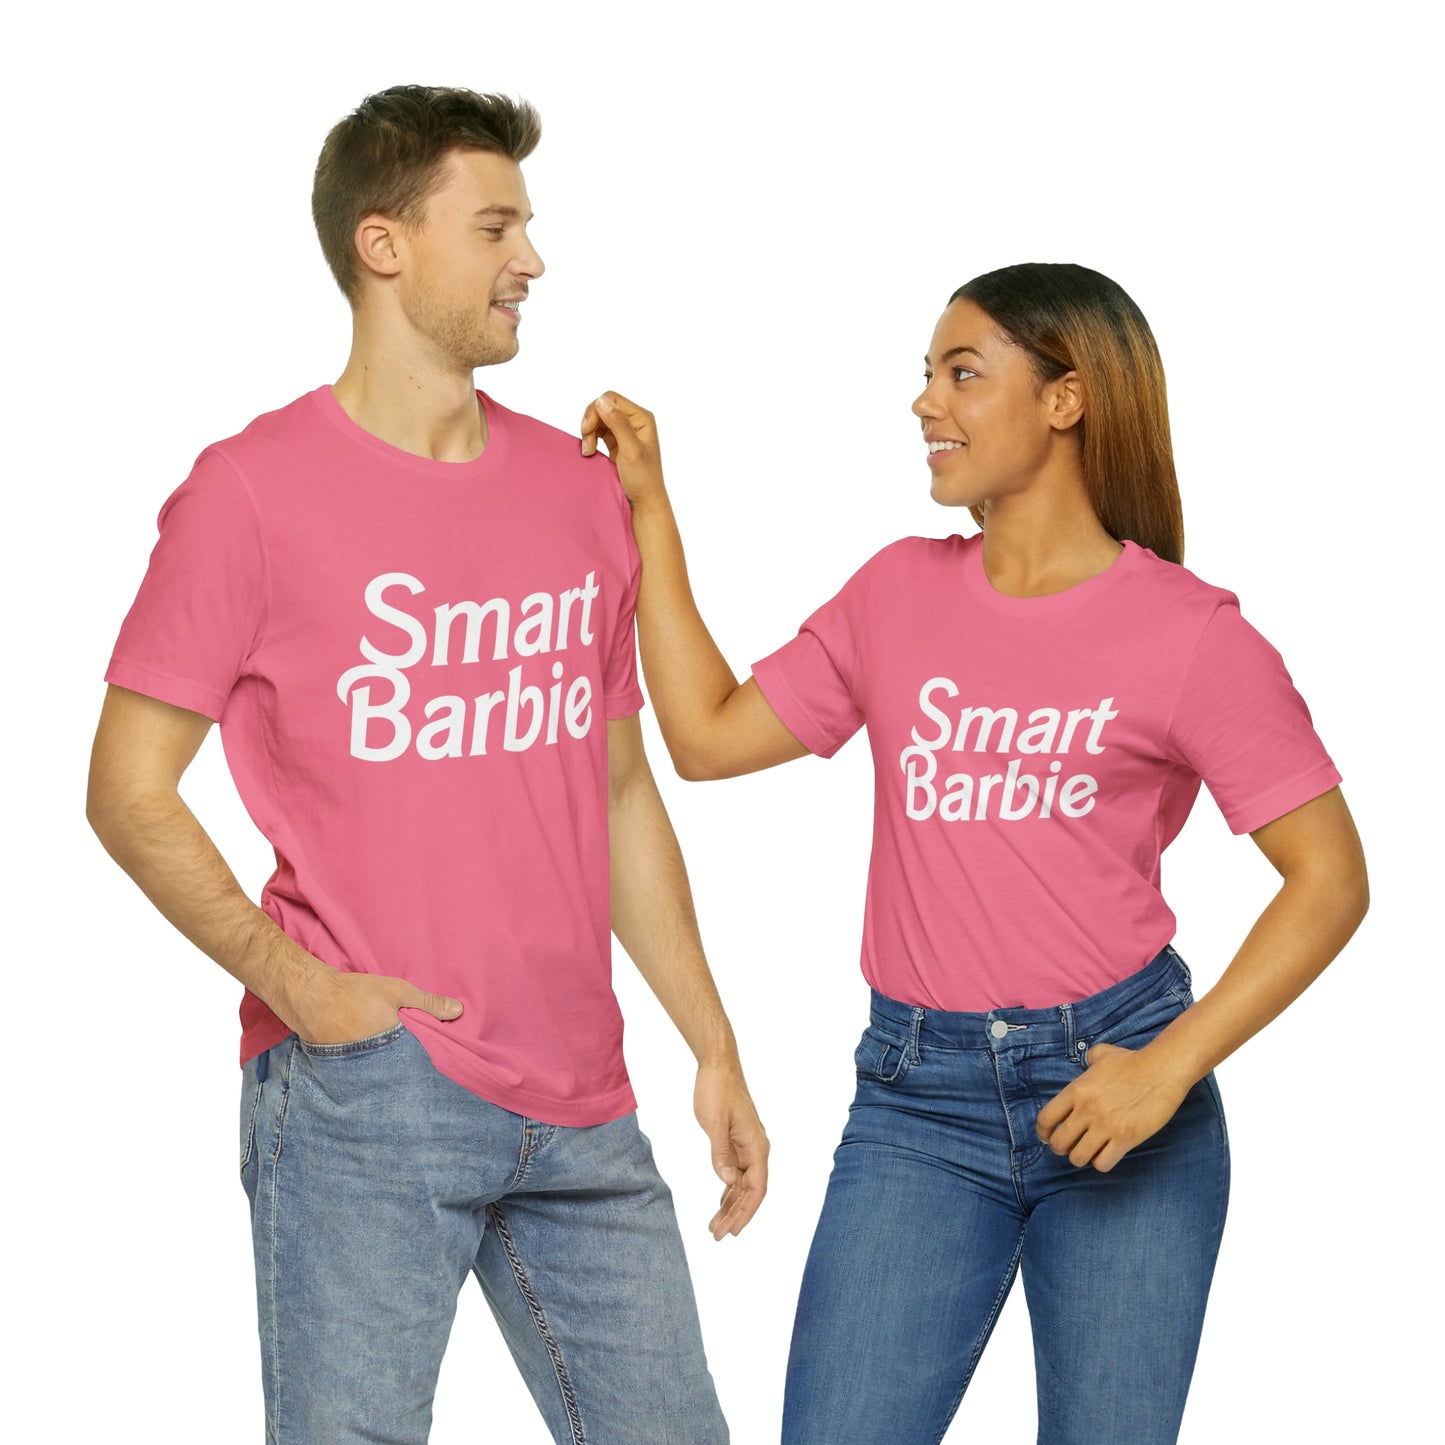 Smart Barbie